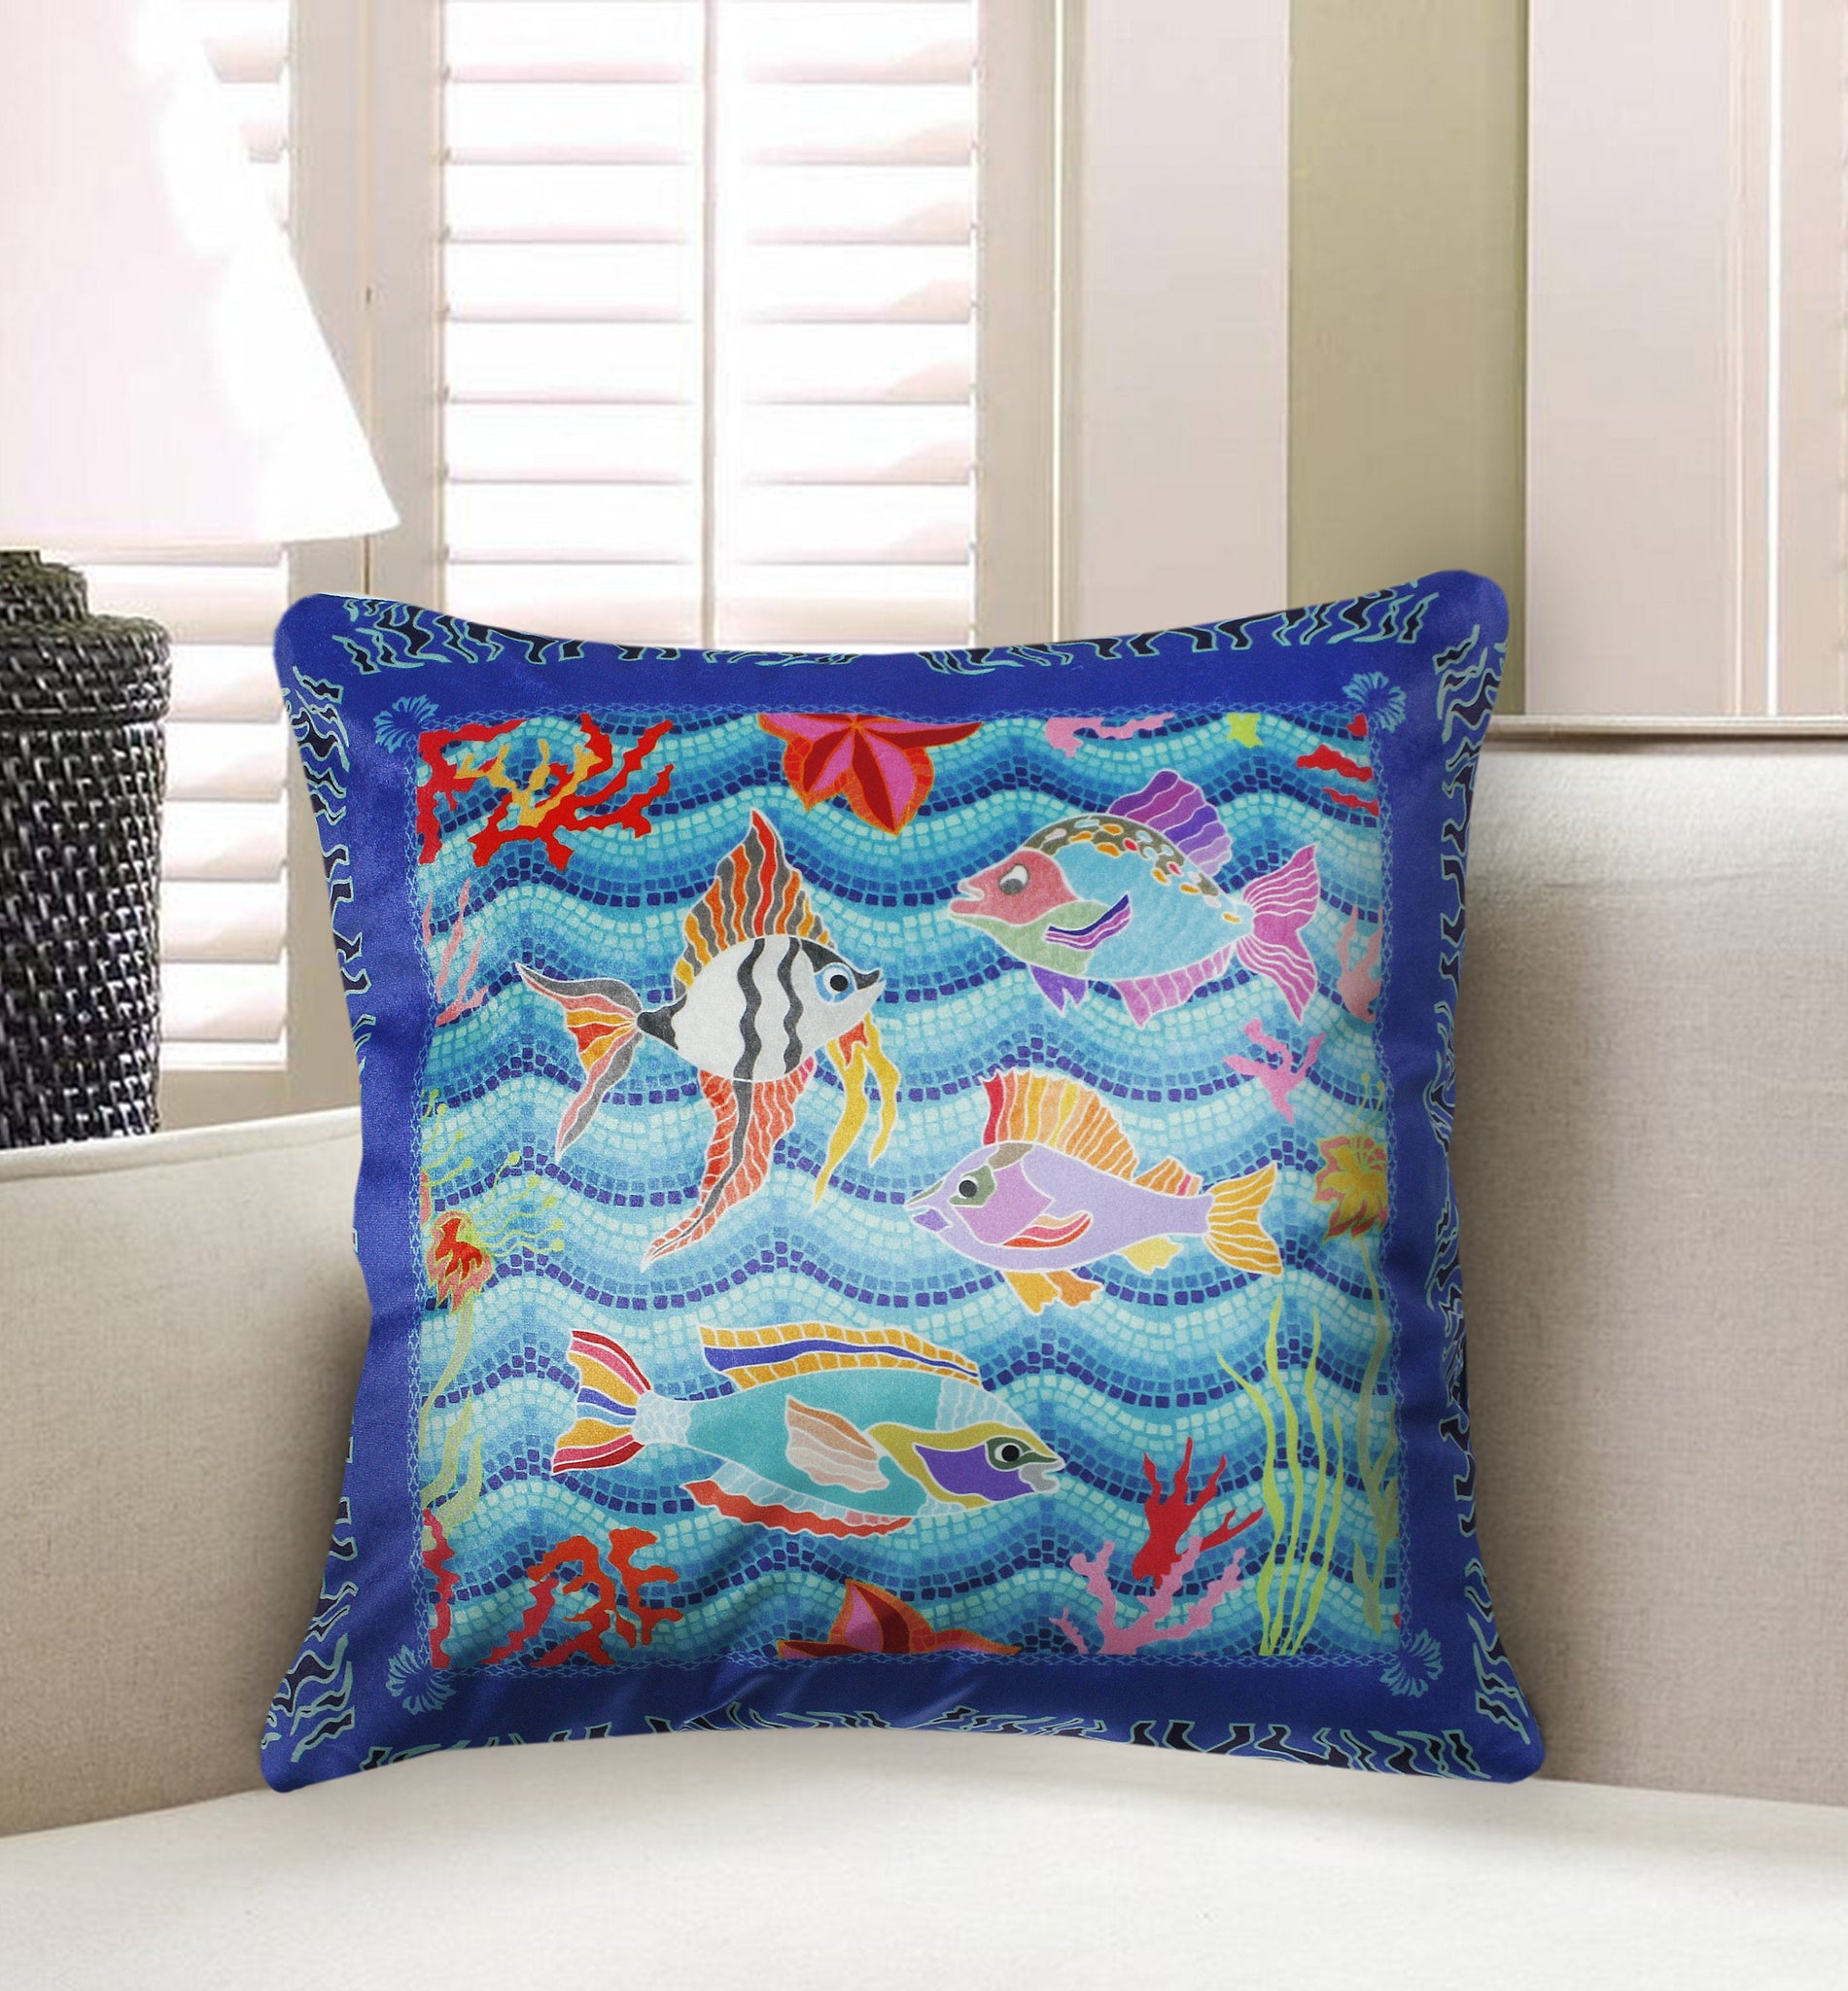 Blue Velvet Cushion Cover Aqua World Decorative Pillowcase Home Decor Throw Pillow for Sofa Chair Living Room 45x45 cm 18x18 In